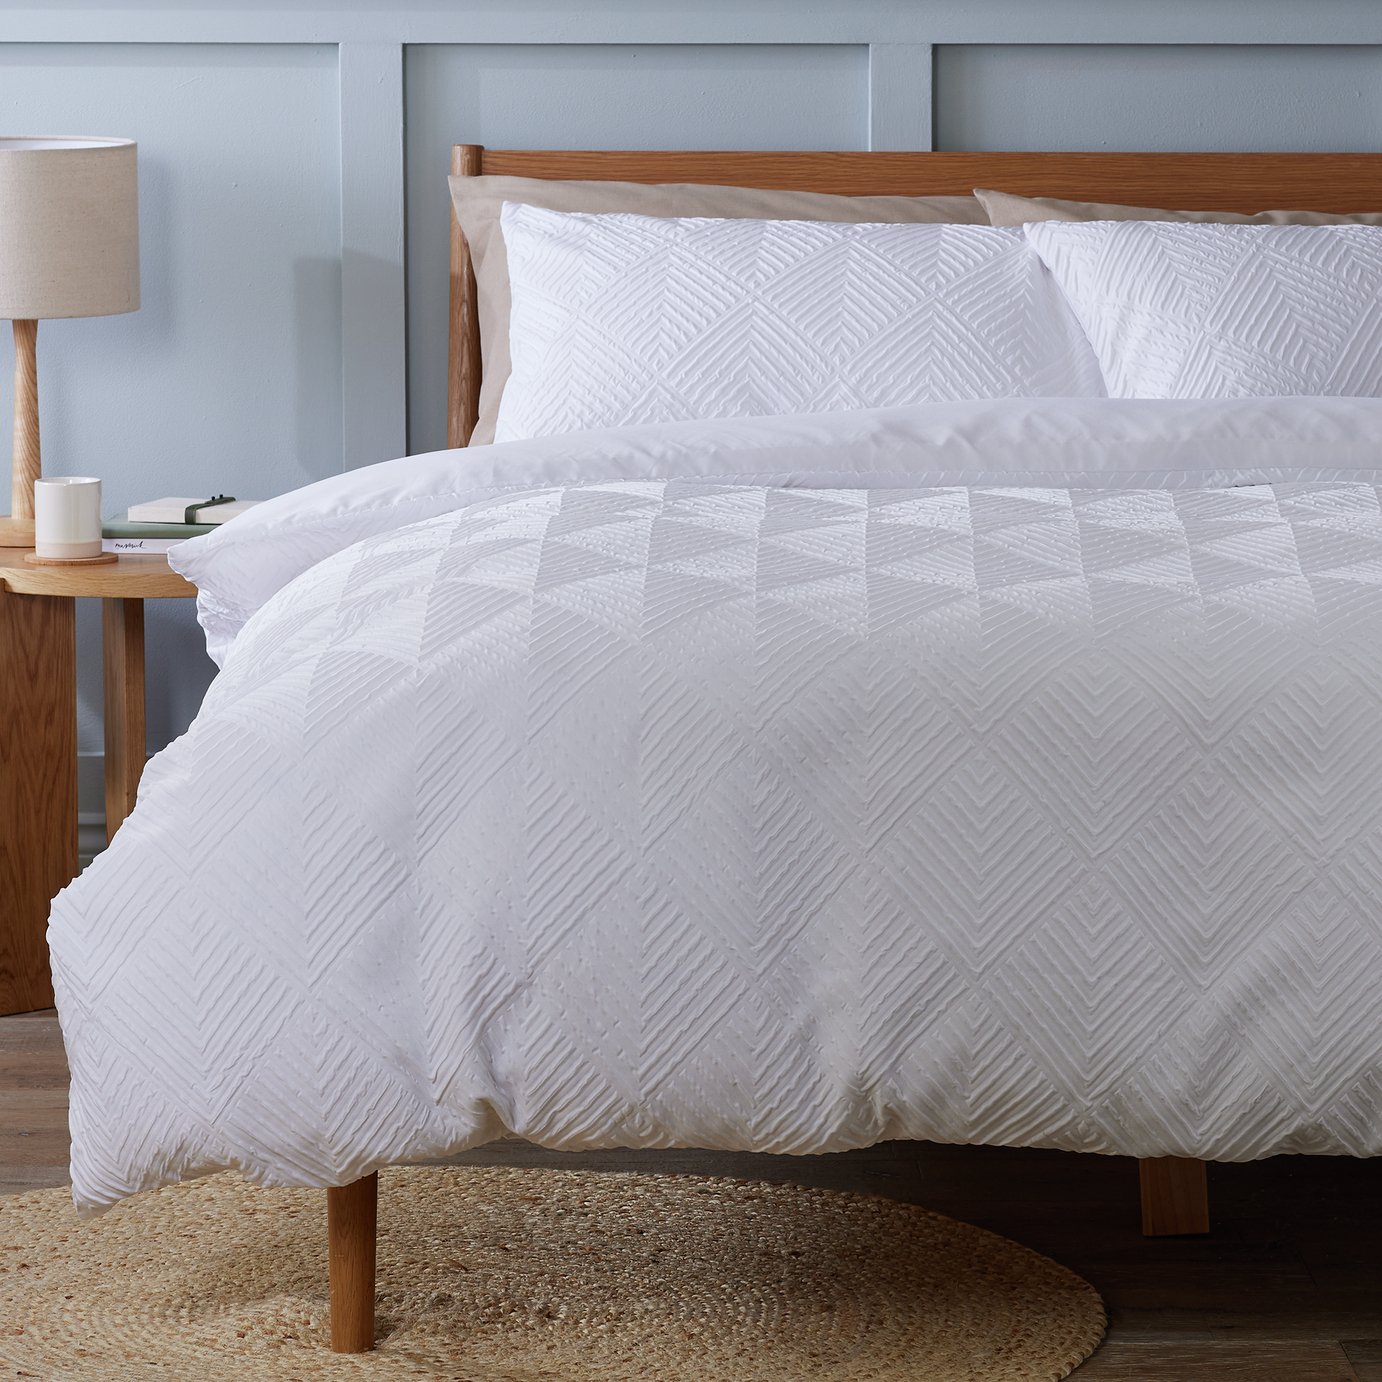 Argos Home Textured Embossed White Bedding Set - Superking